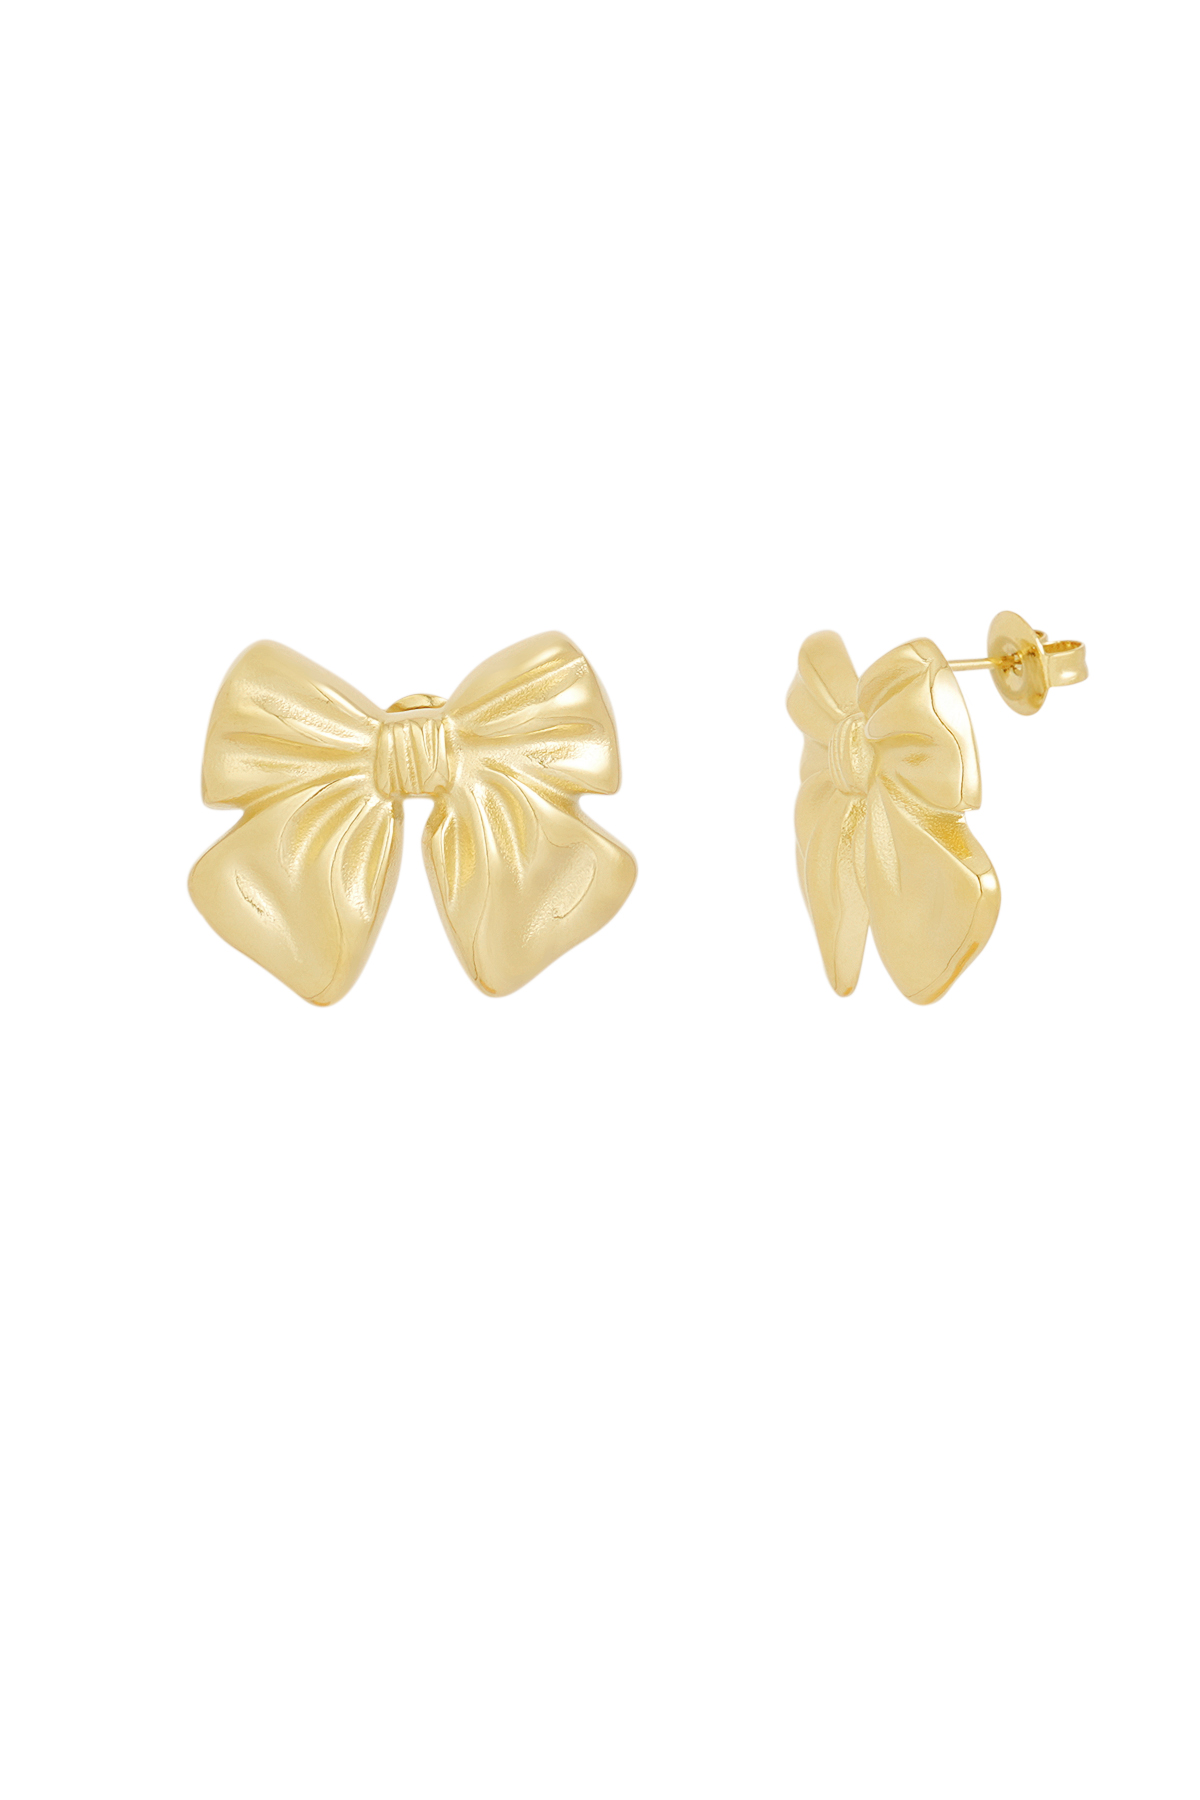 Bowlicious stud earrings - gold